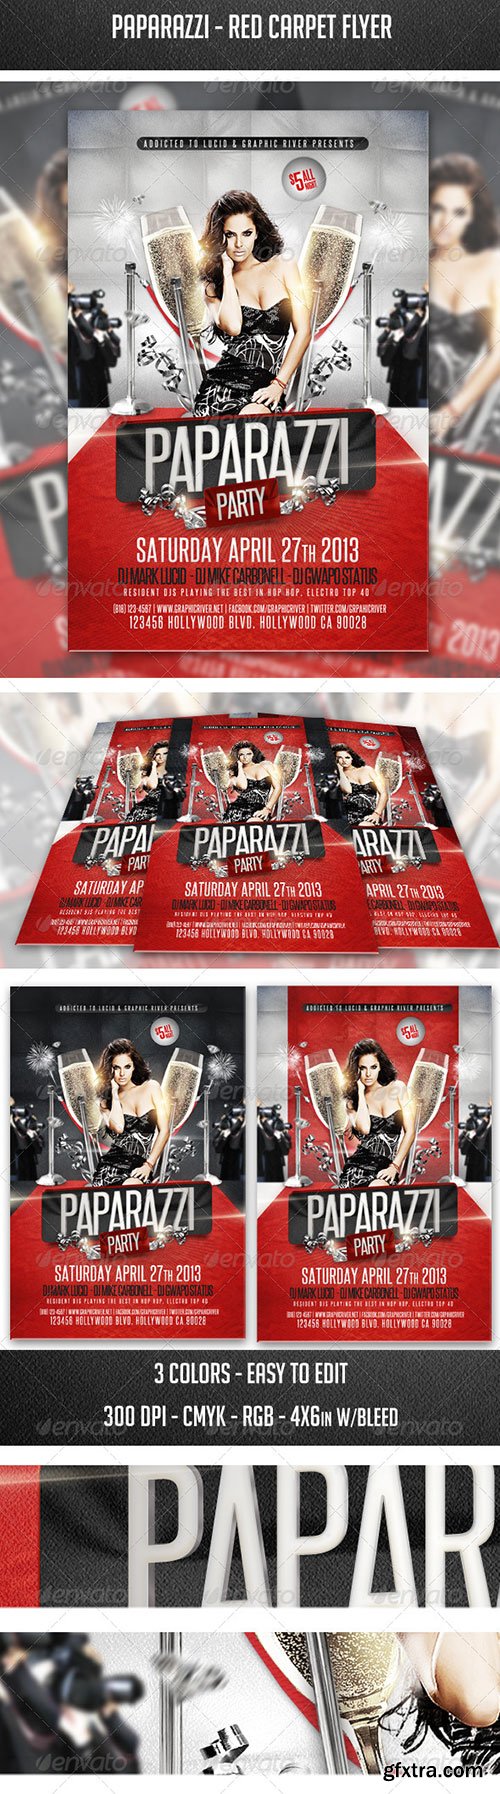 GraphicRiver - Paparazzi - Red Carpet Flyer